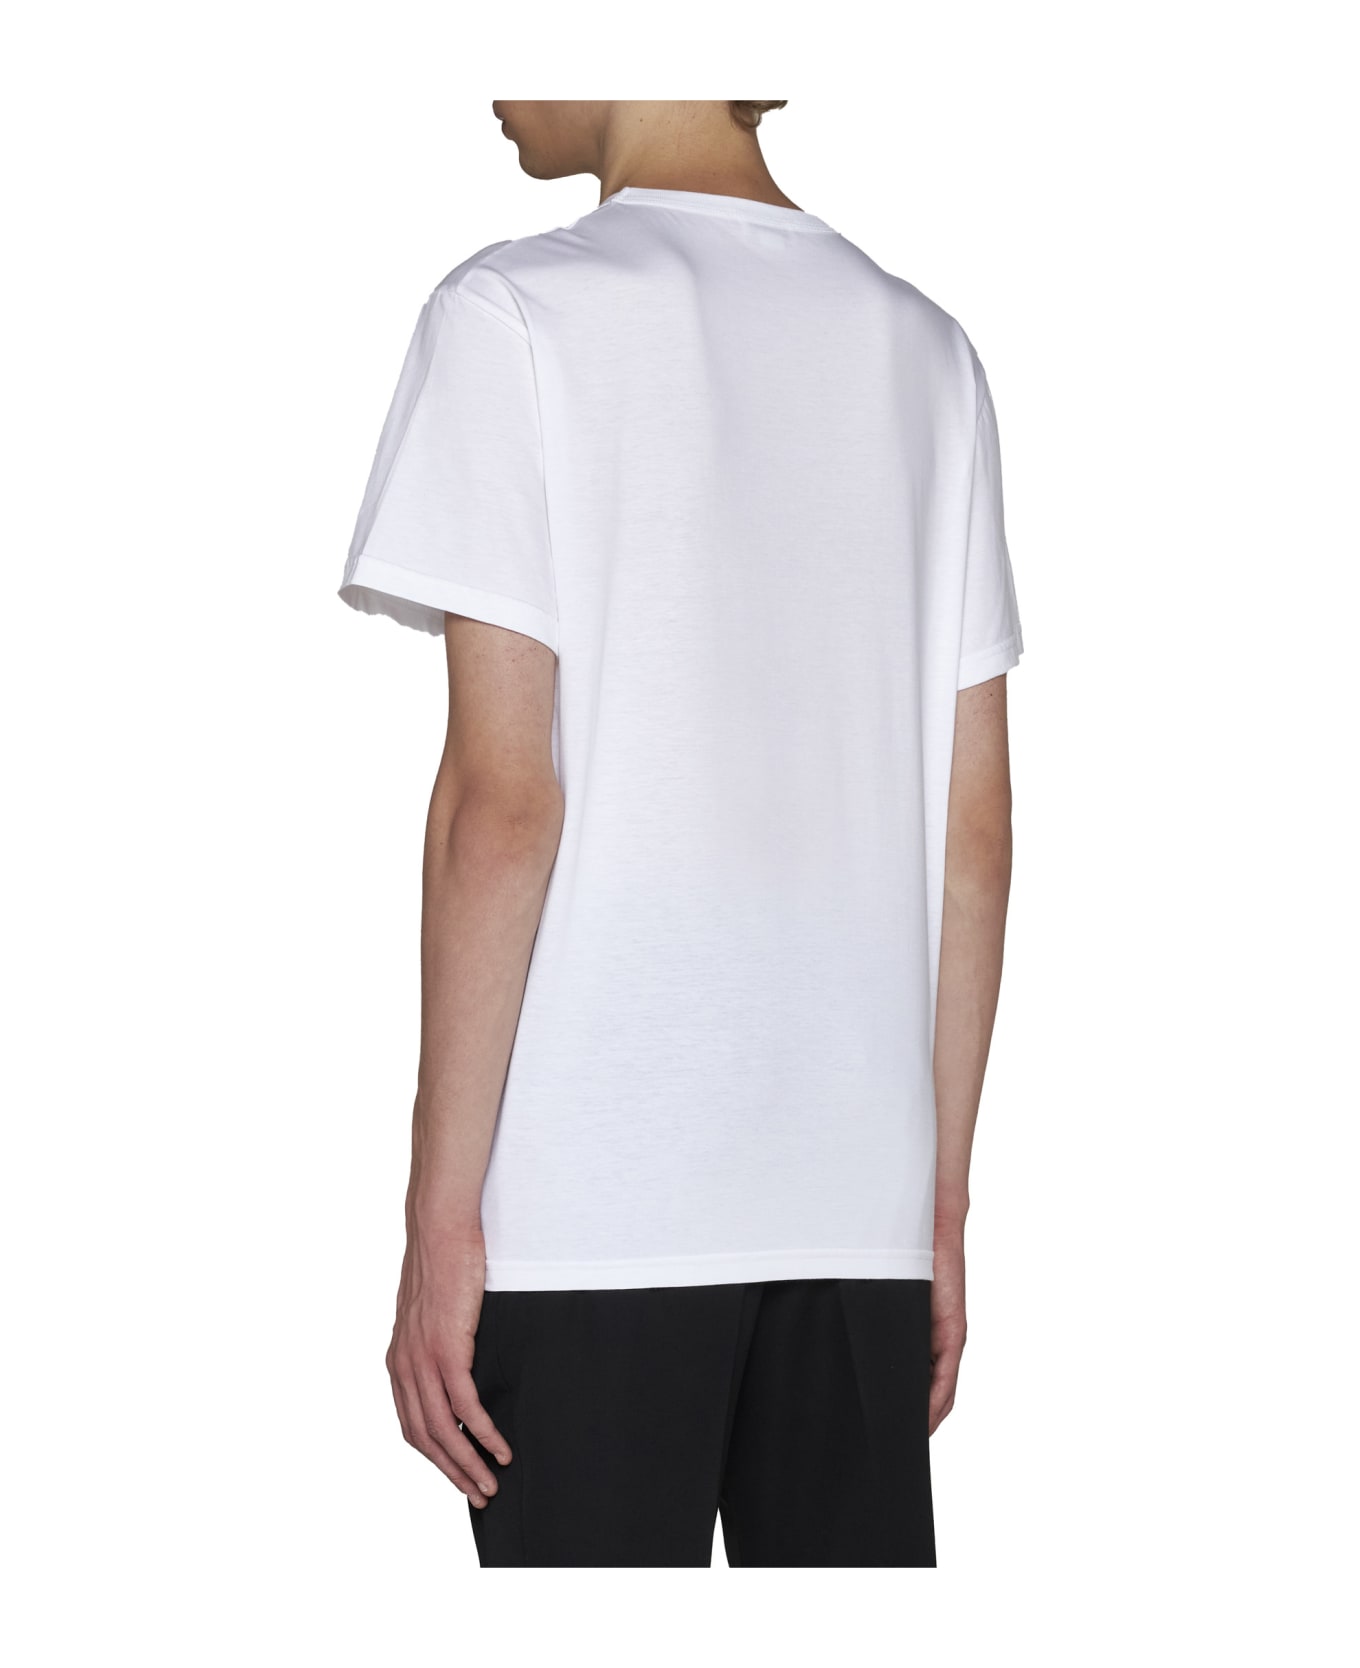 Alexander McQueen T-shirt - White シャツ